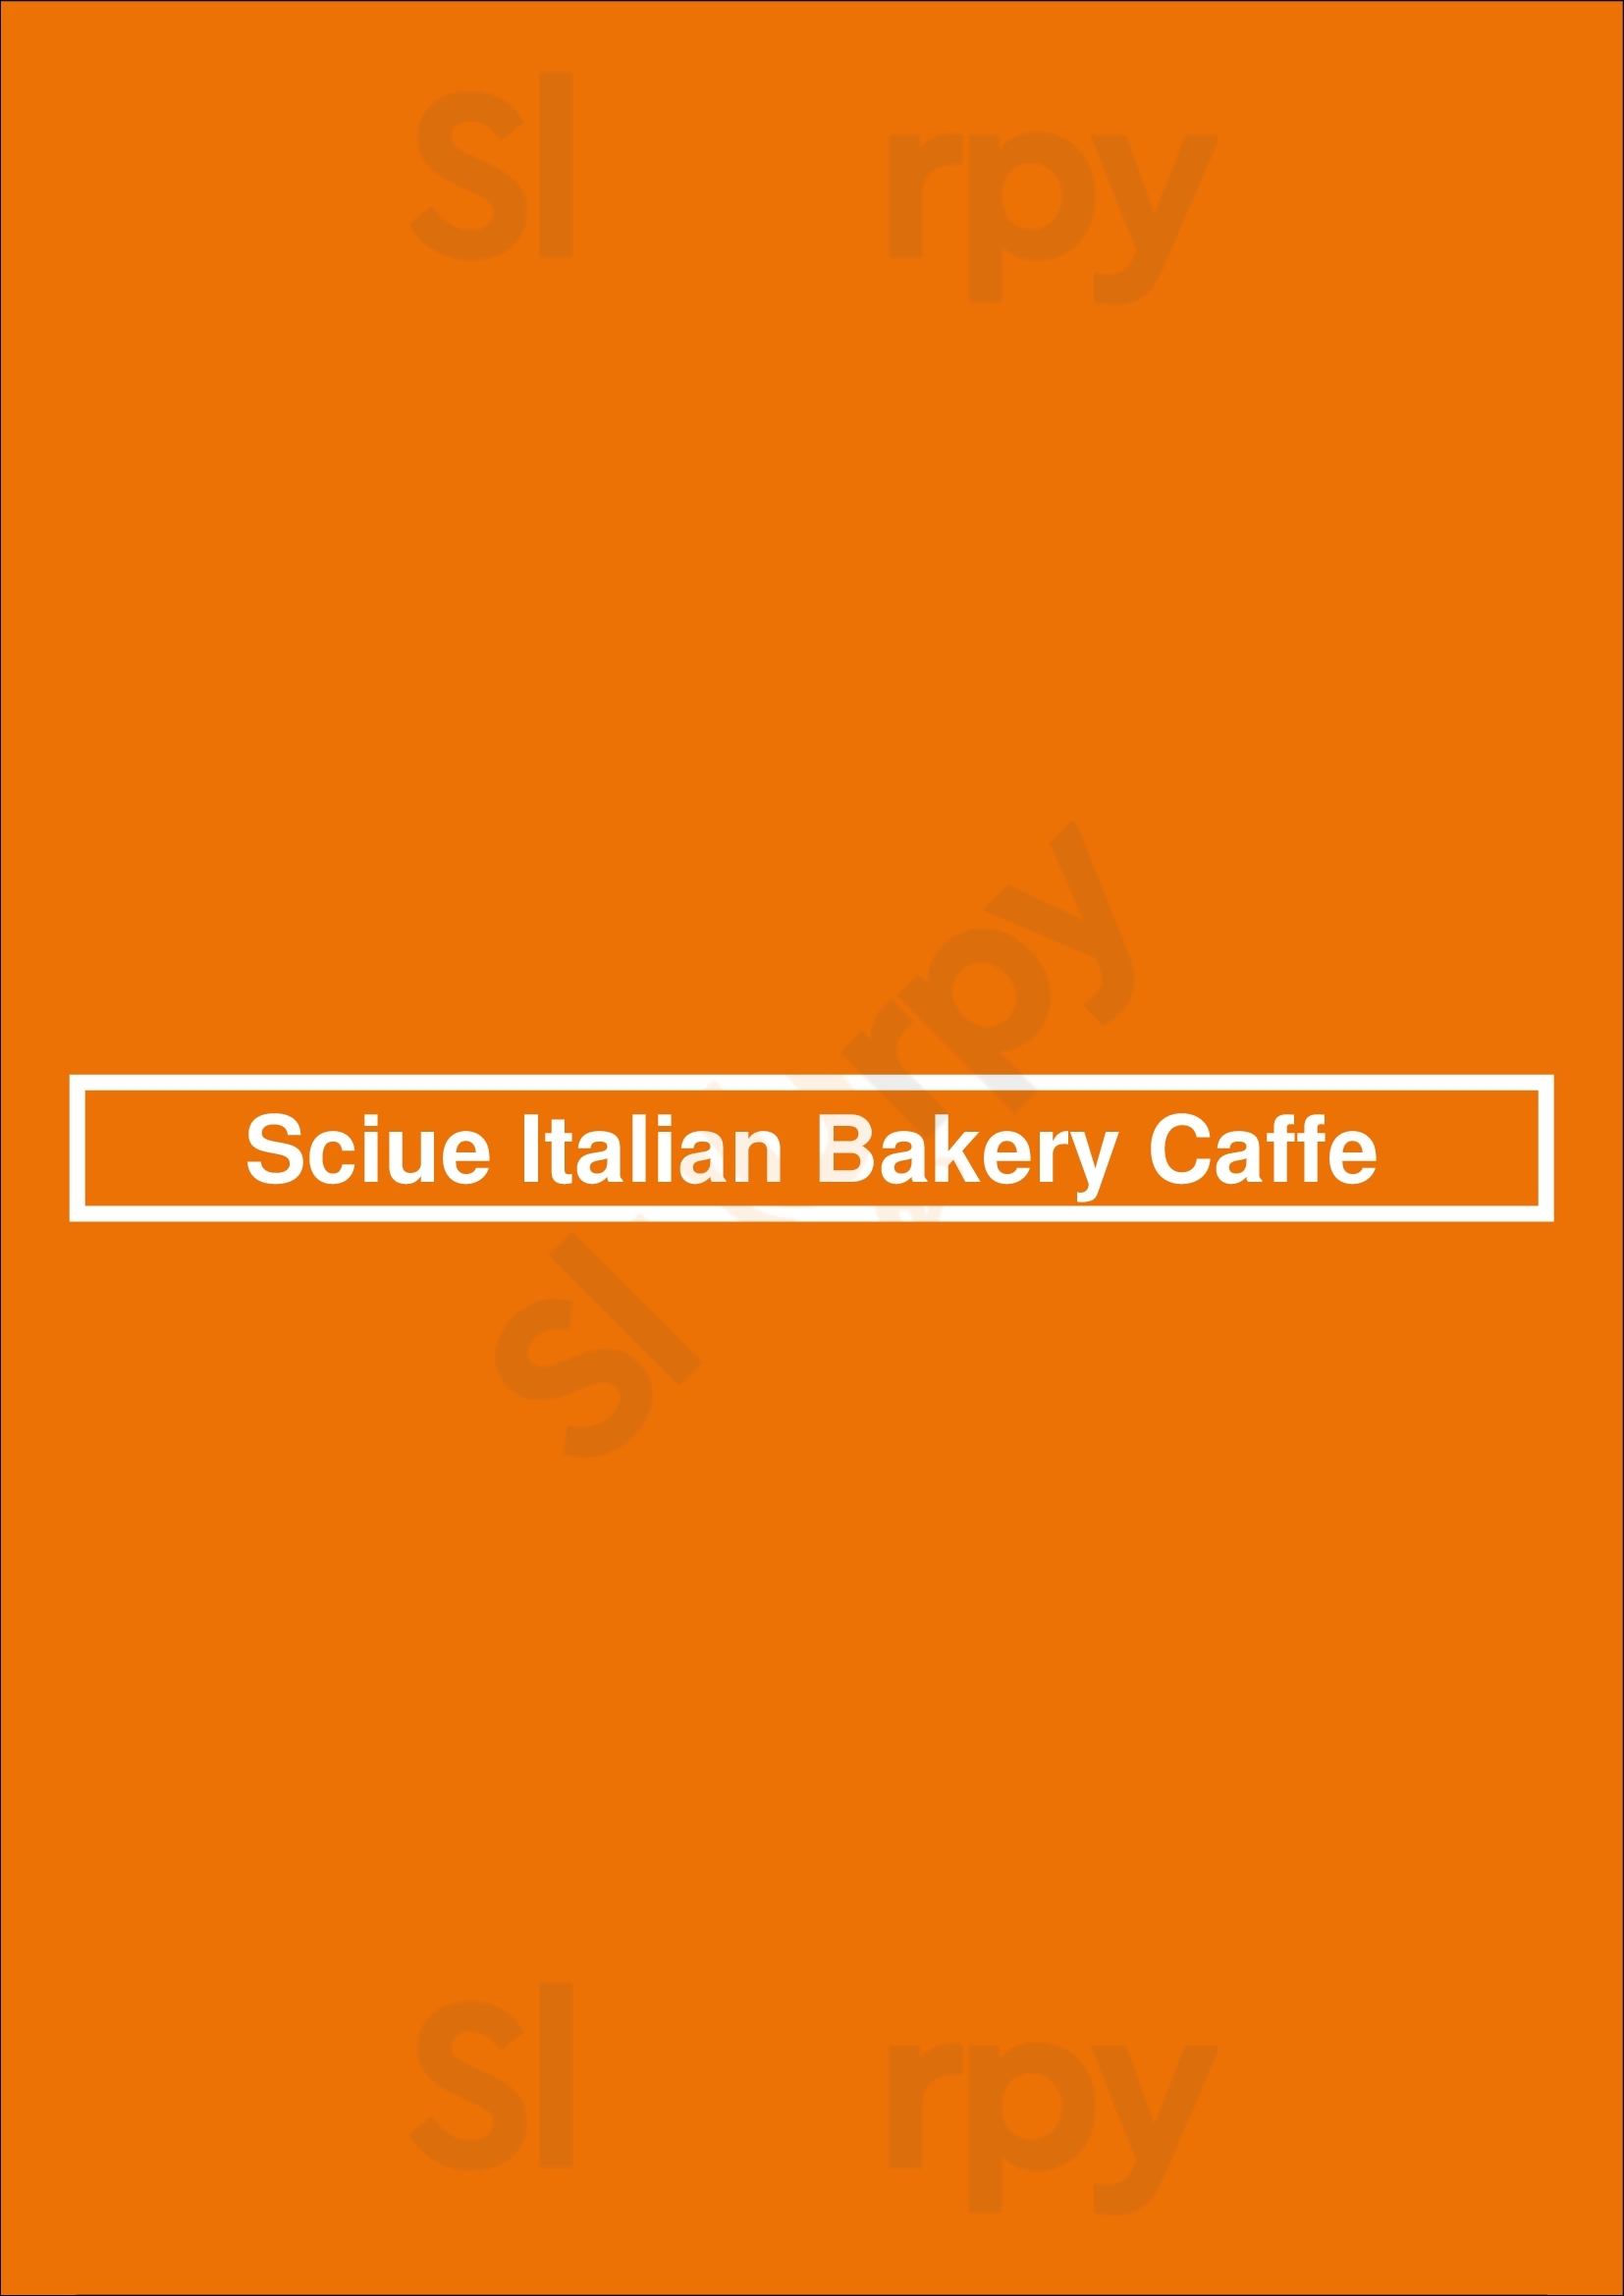 Sciue Italian Bakery Caffe Vancouver Menu - 1